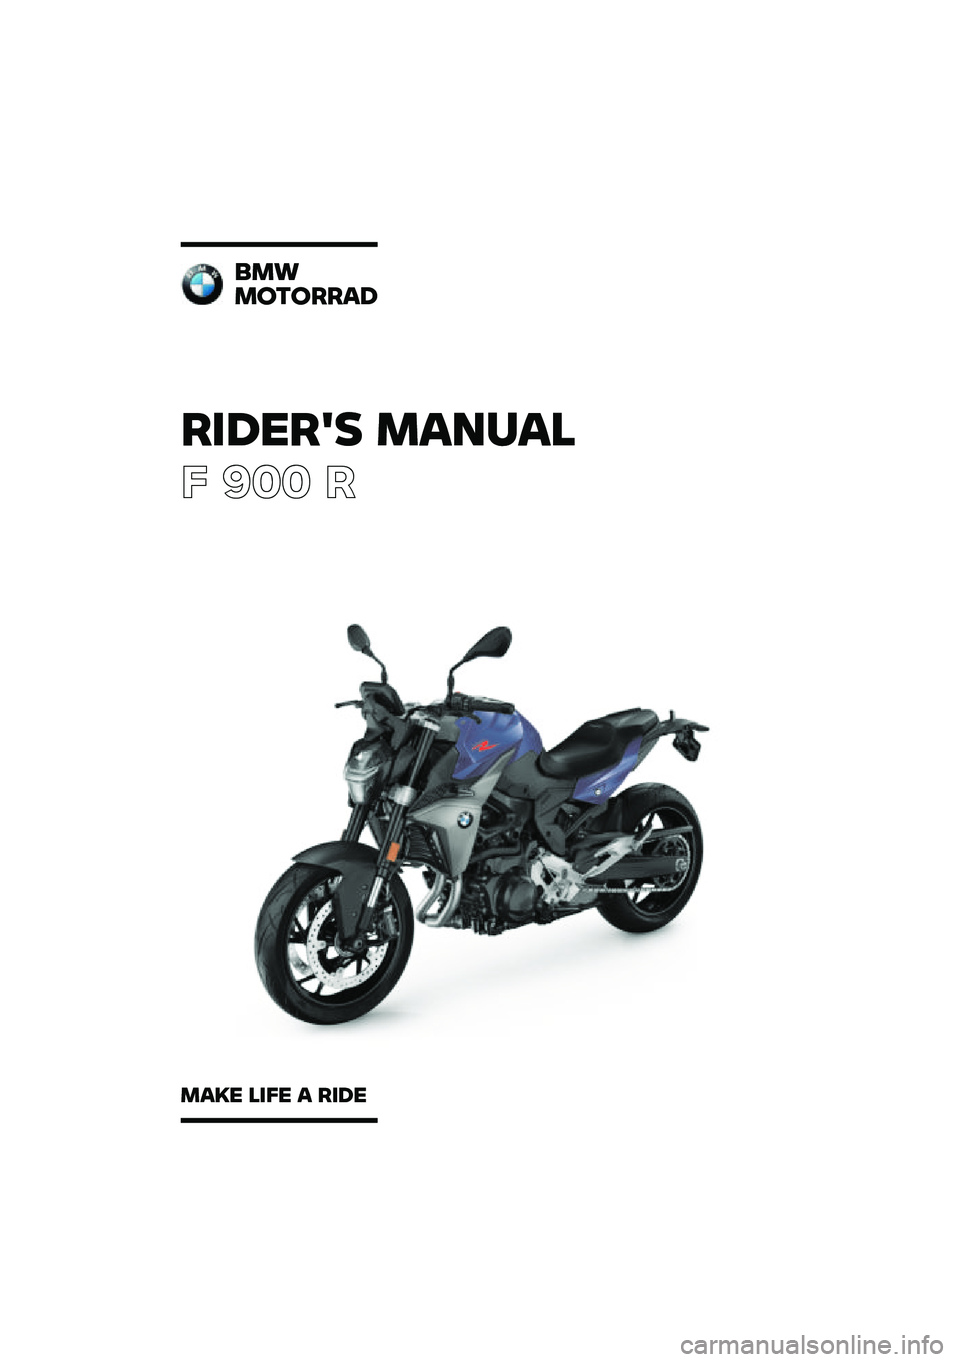 BMW MOTORRAD F 900 R 2020  Riders Manual (in English) ������� �\b�	�
��	�\f
� ��� �
�
�\b�
�\b������	�
�\b�	�� �\f��� �	 ���� 